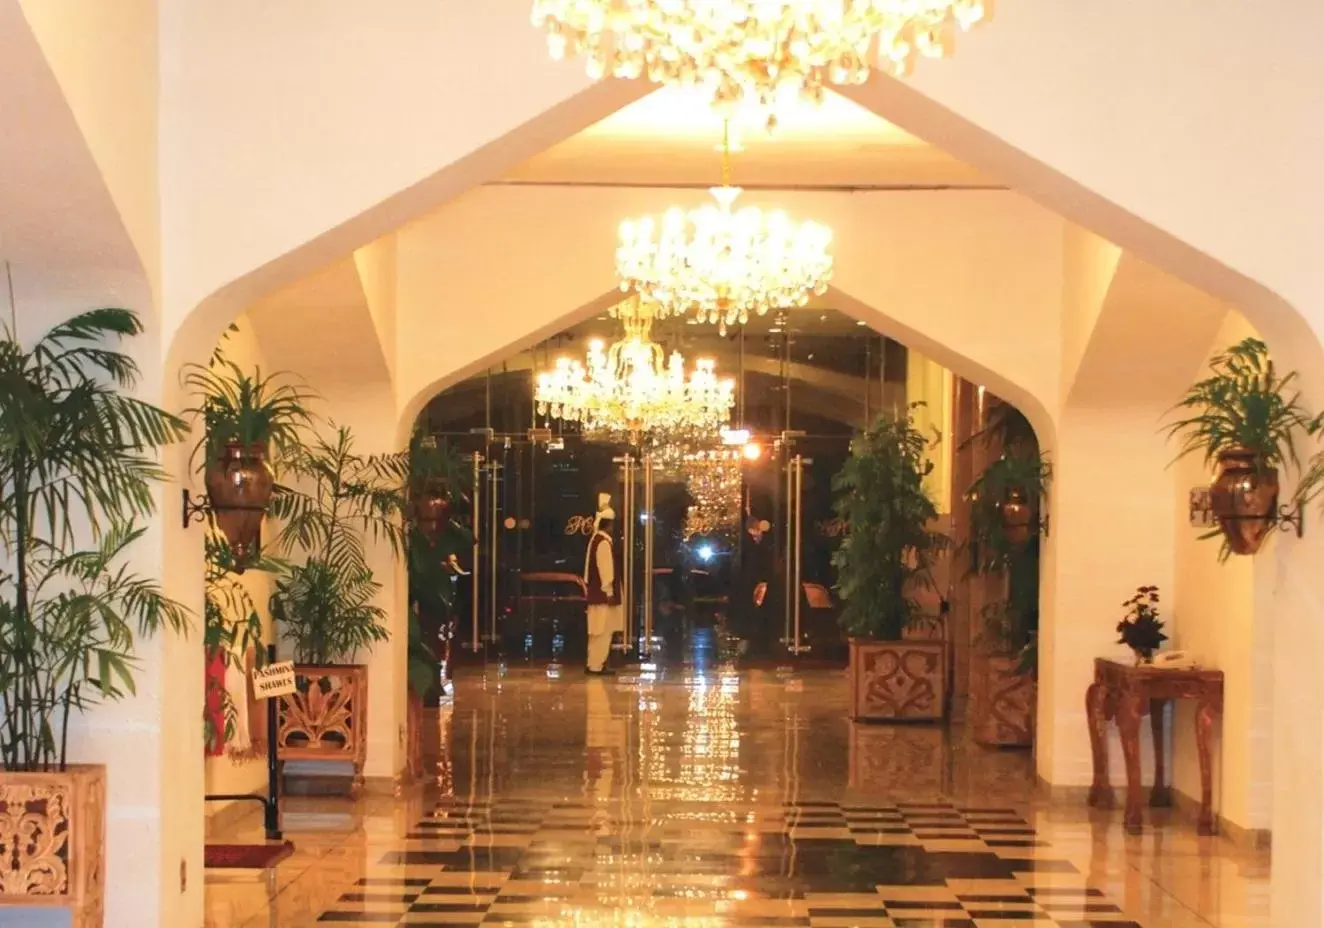 Lobby or reception in Pearl Continental Hotel, Karachi